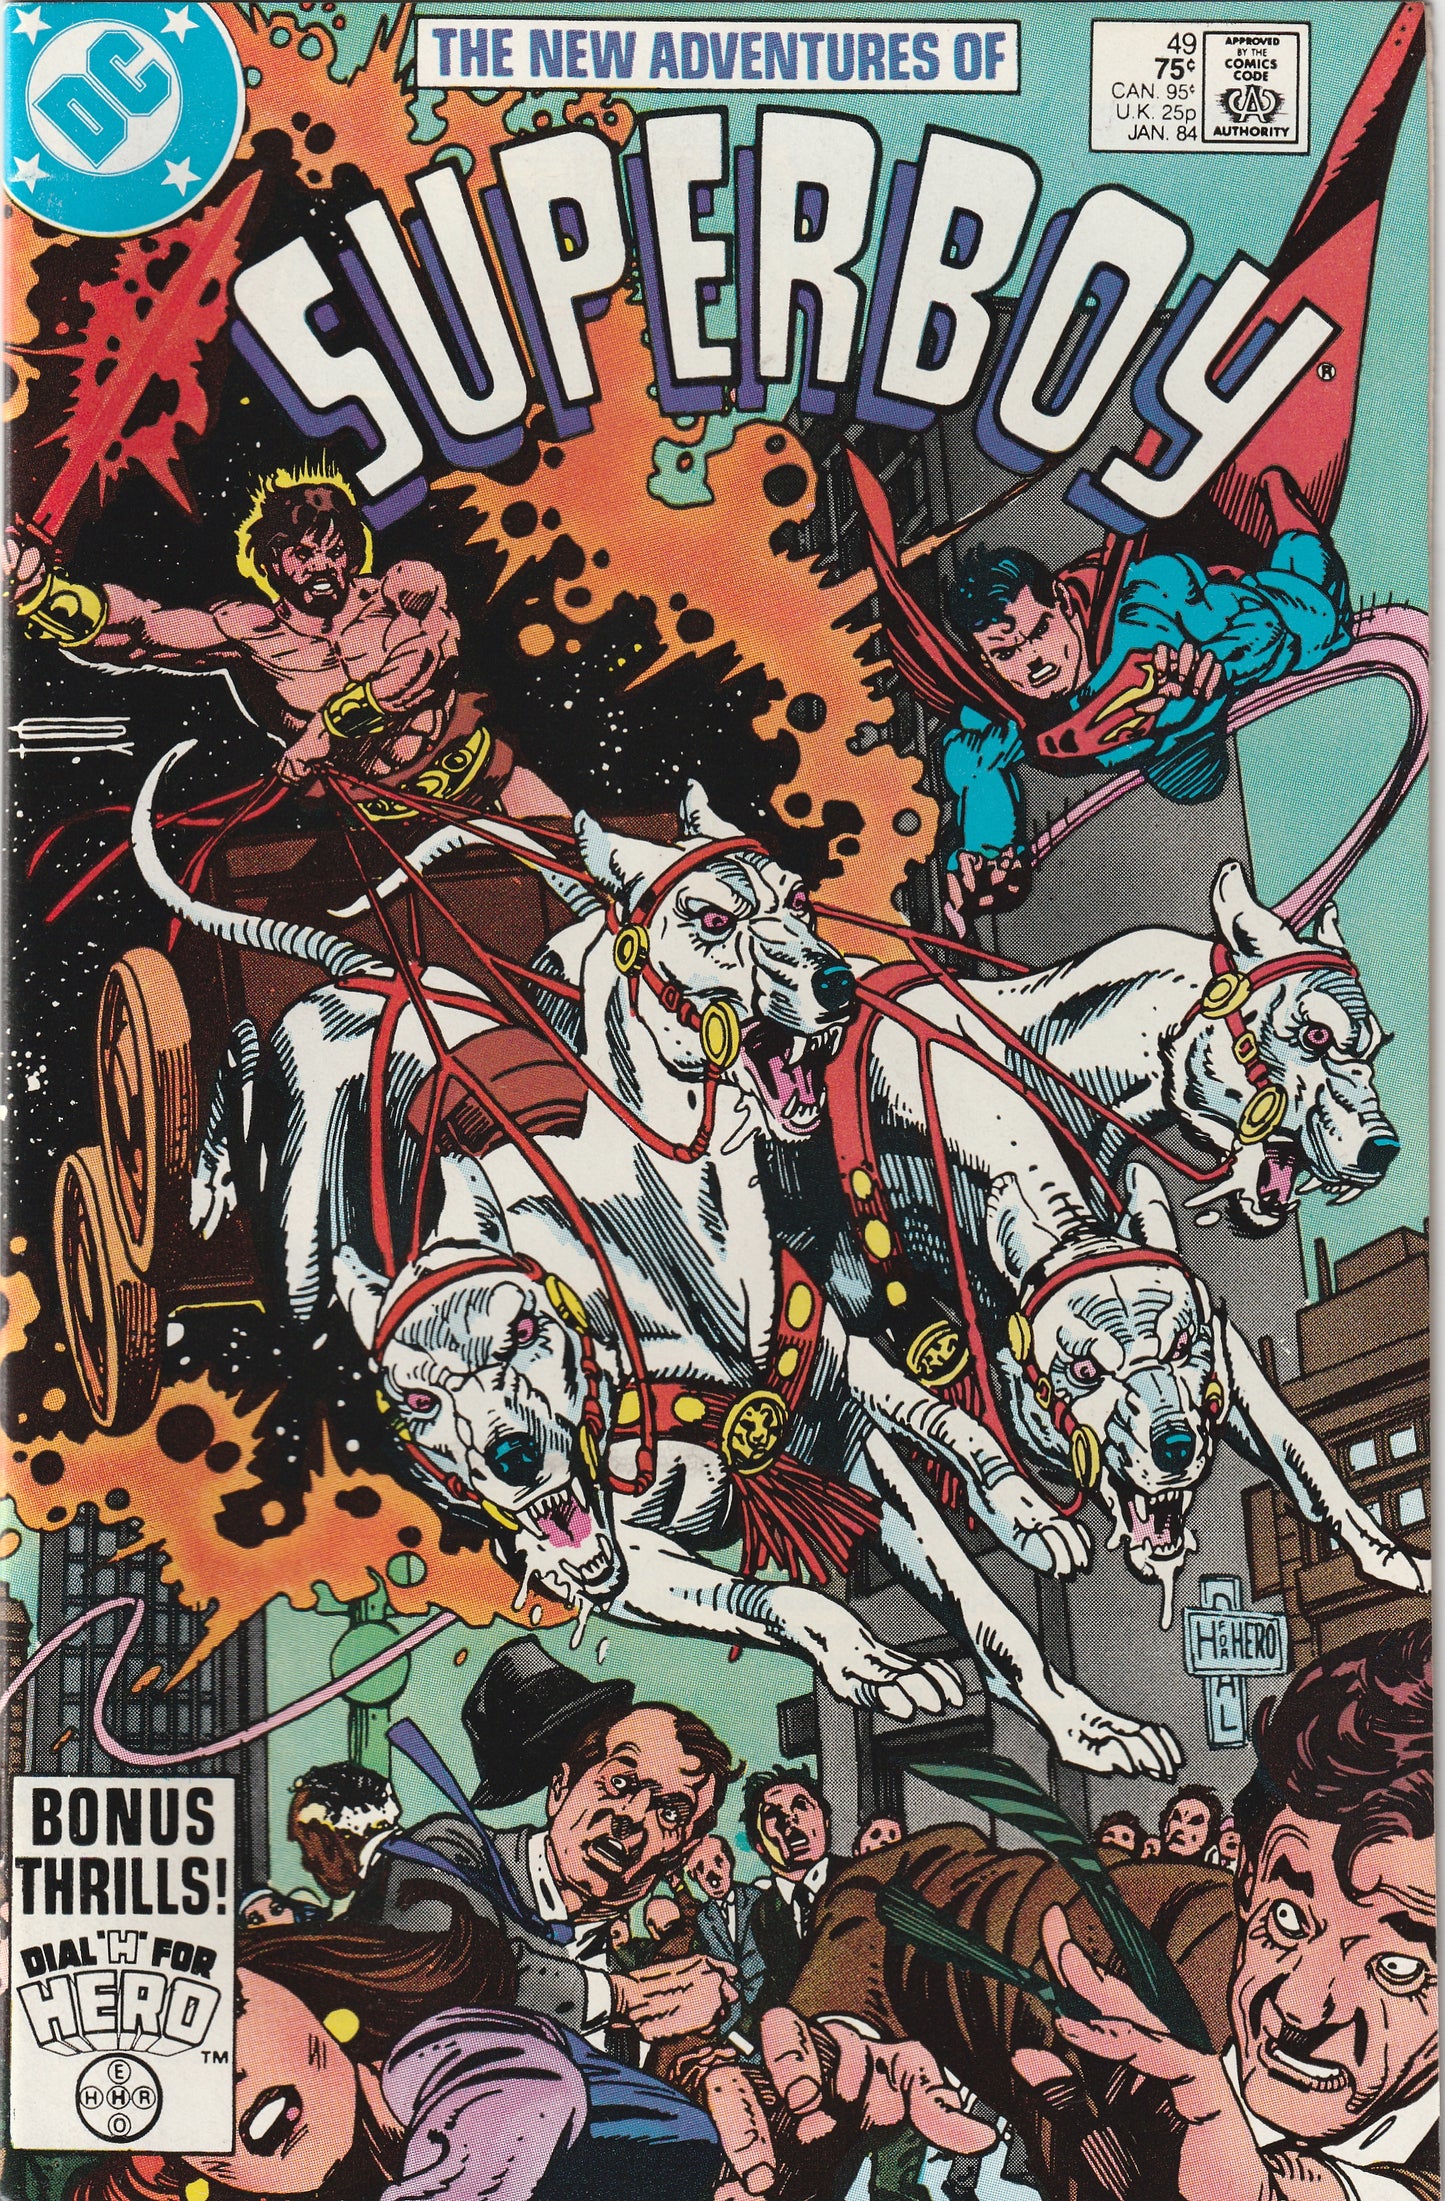 New Adventures of Superboy #49 (1984)